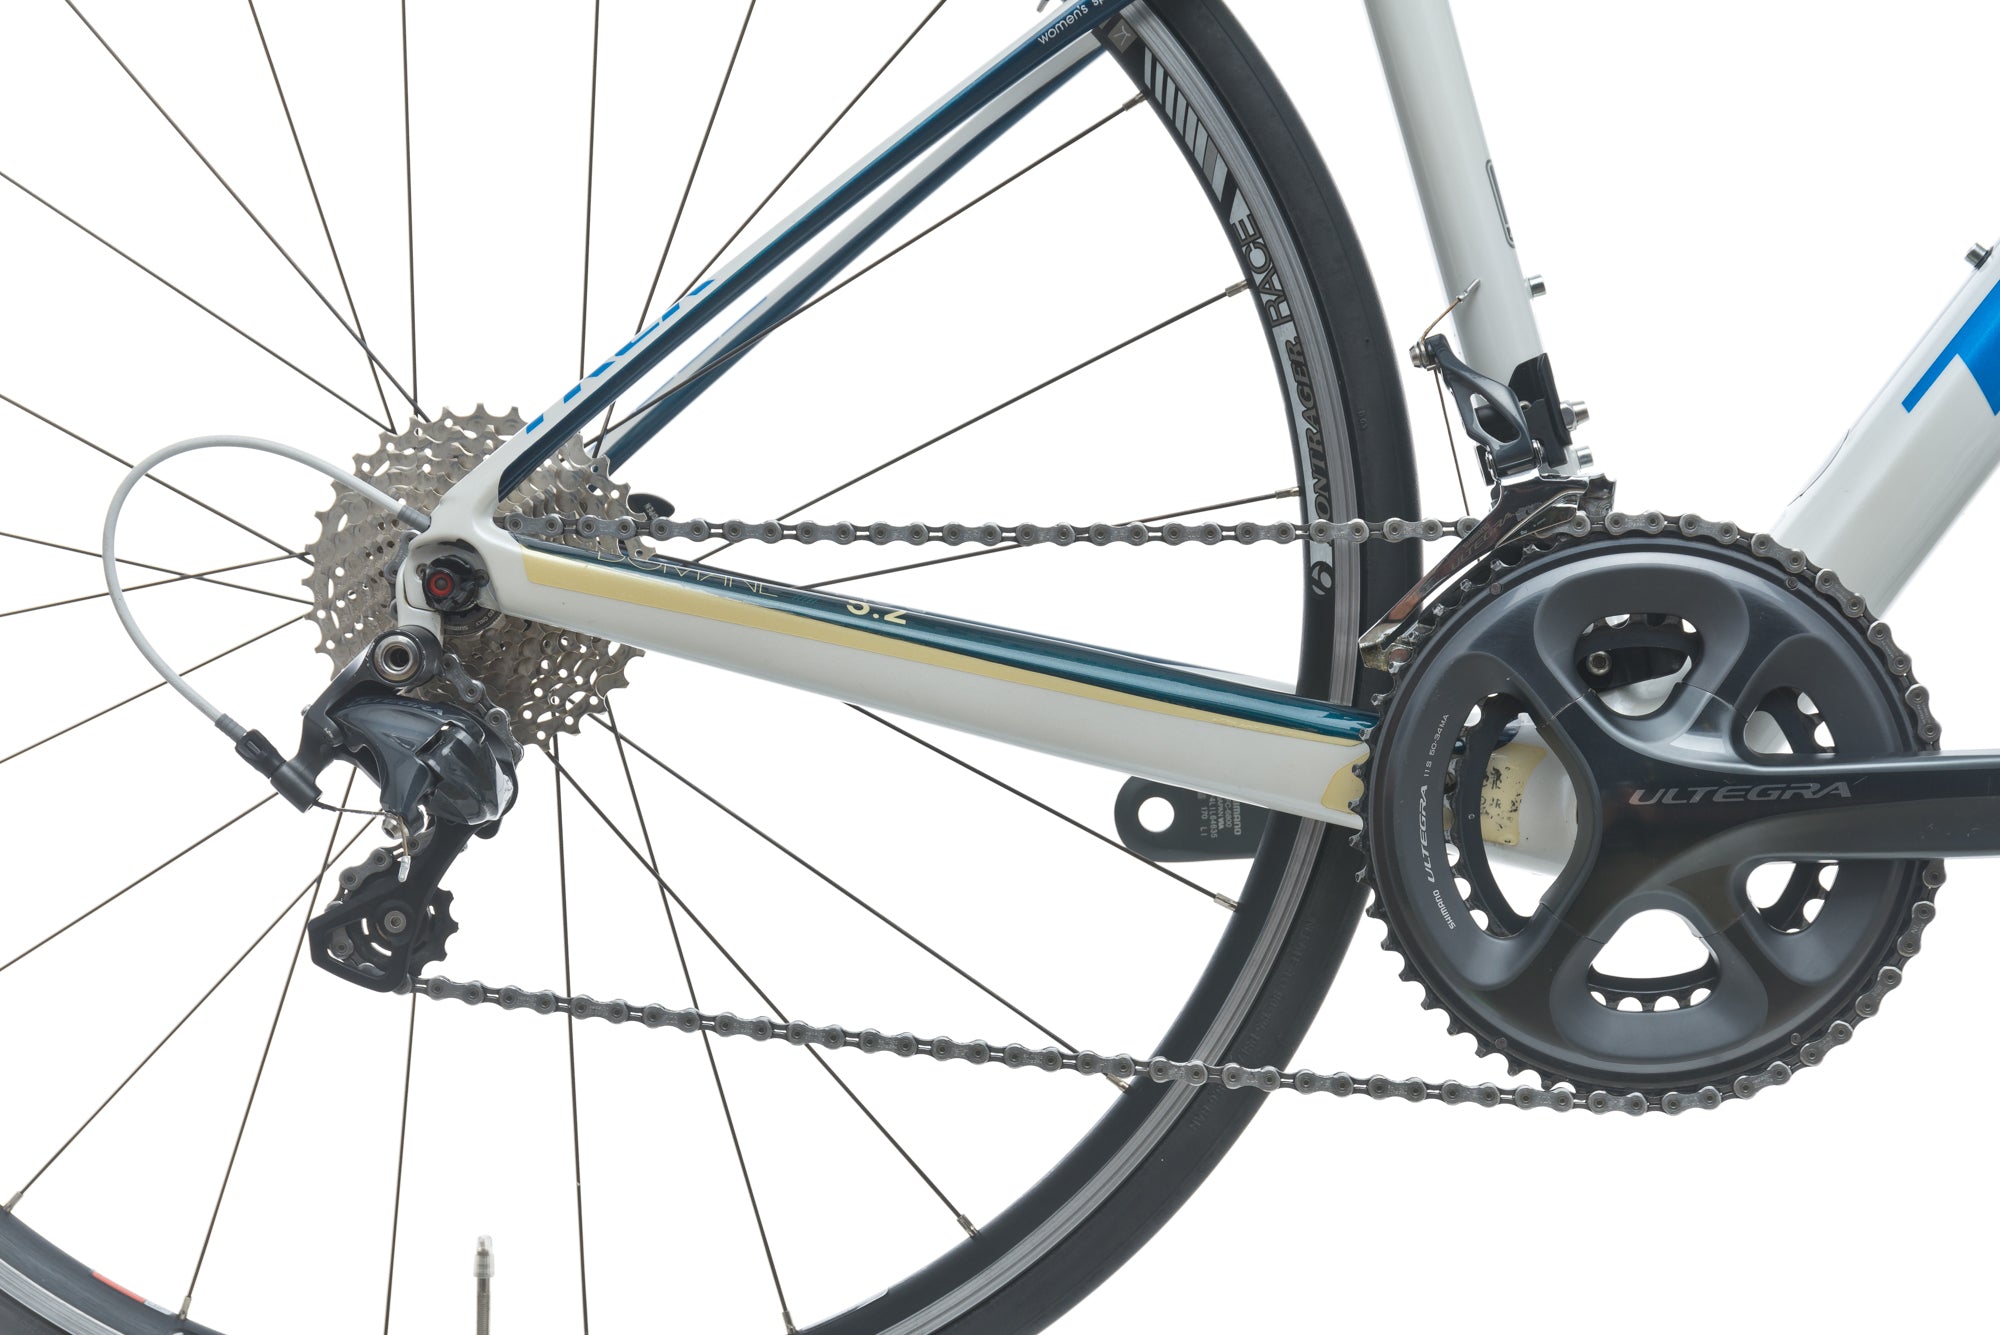 Trek Domane 5.2 WSD 47cm Bike - 2014 sticker